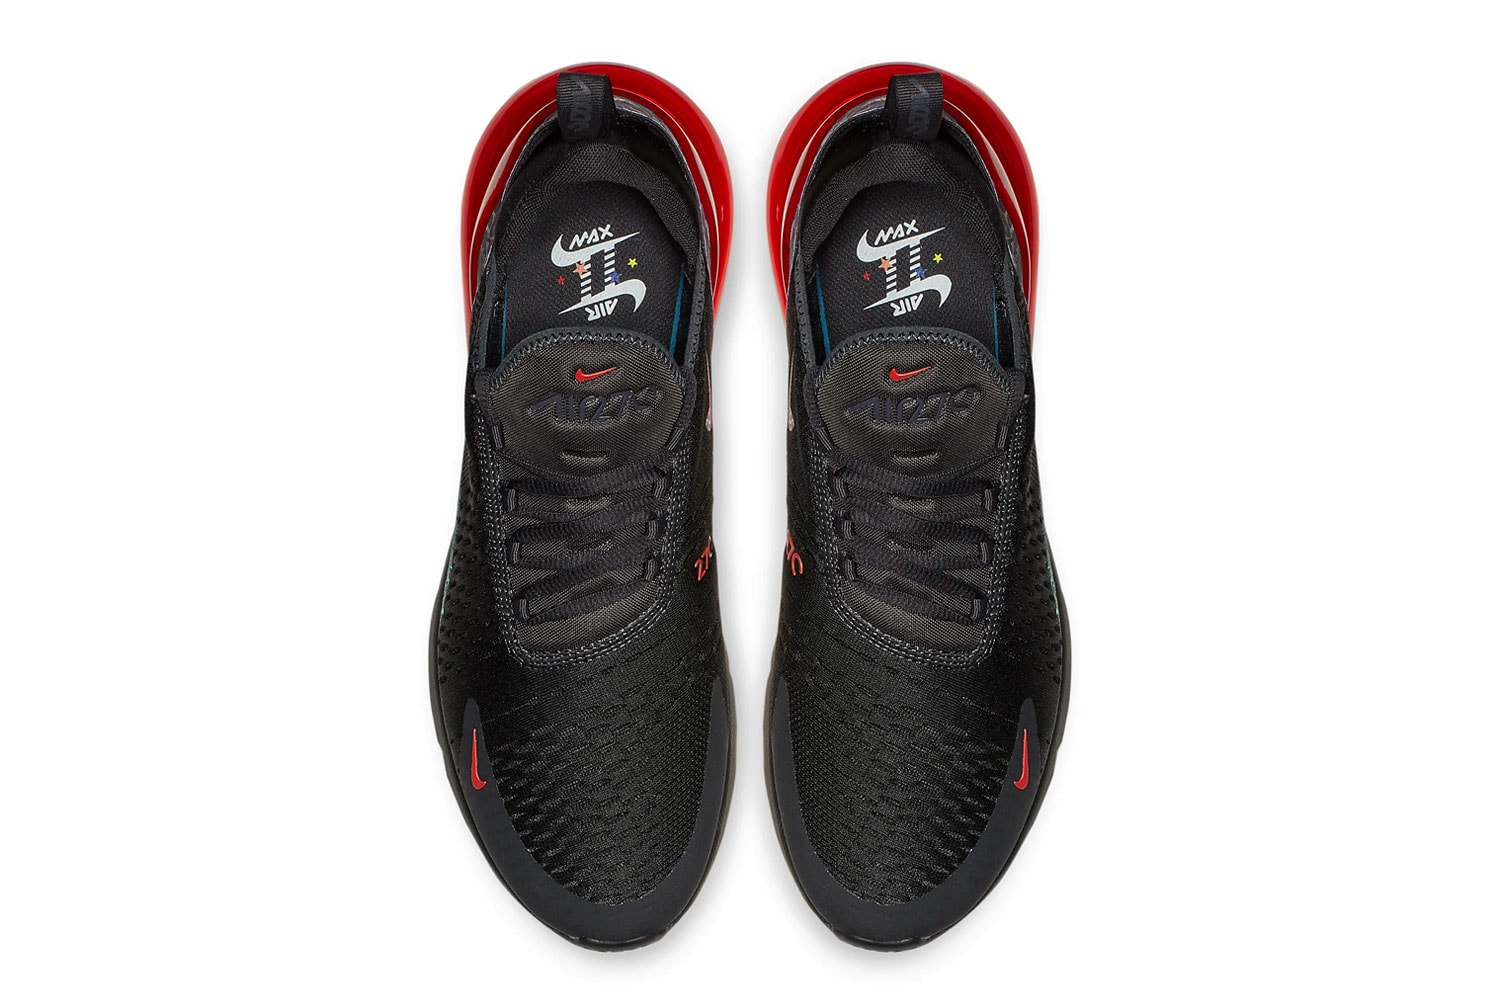 Nike Air Max 270 Reflective Black/Red